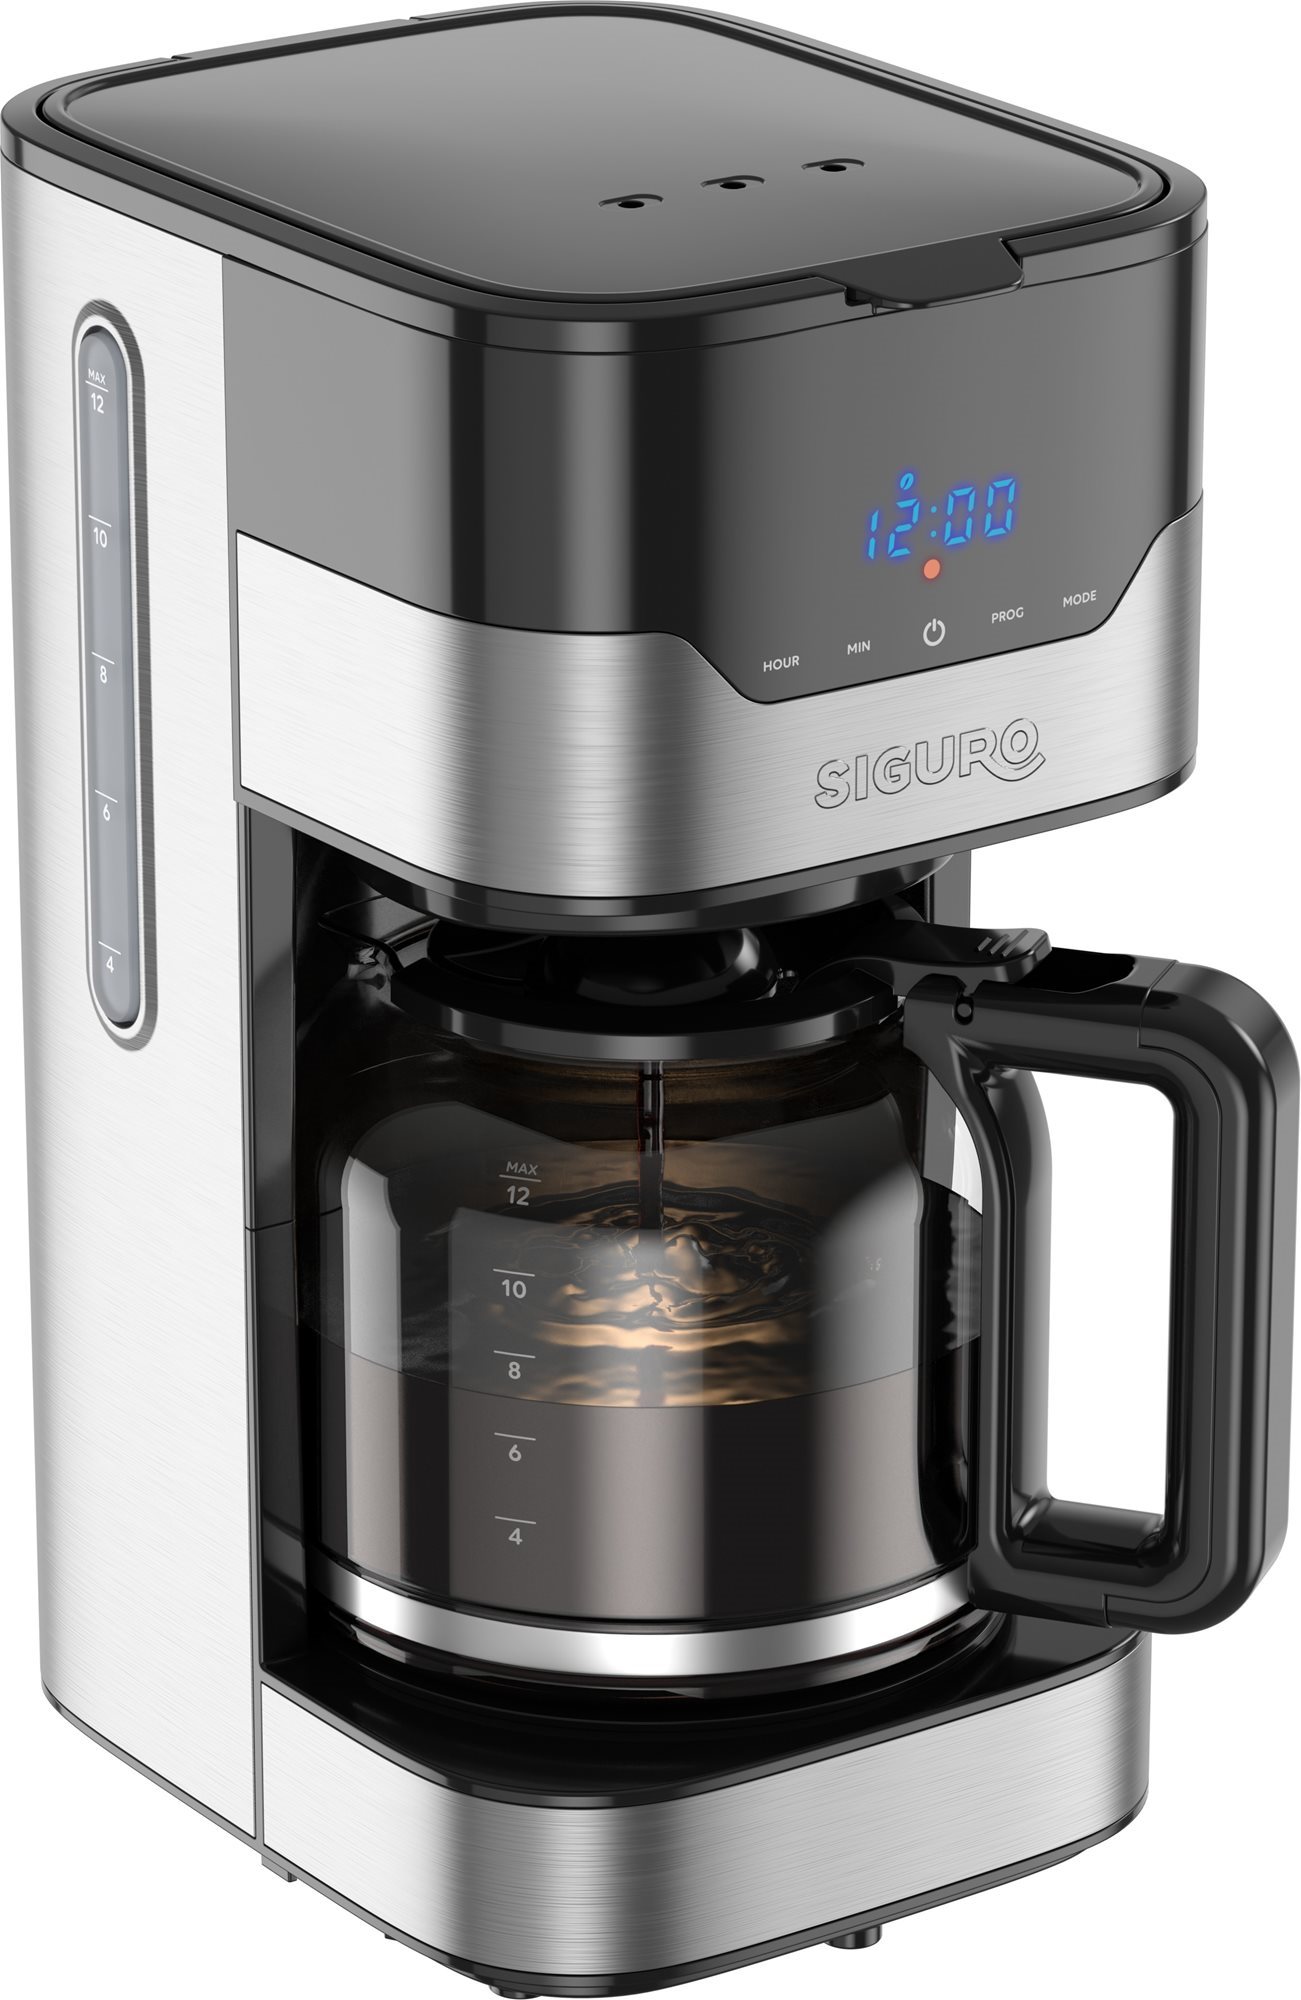 Siguro CM-G65 Coffee Time